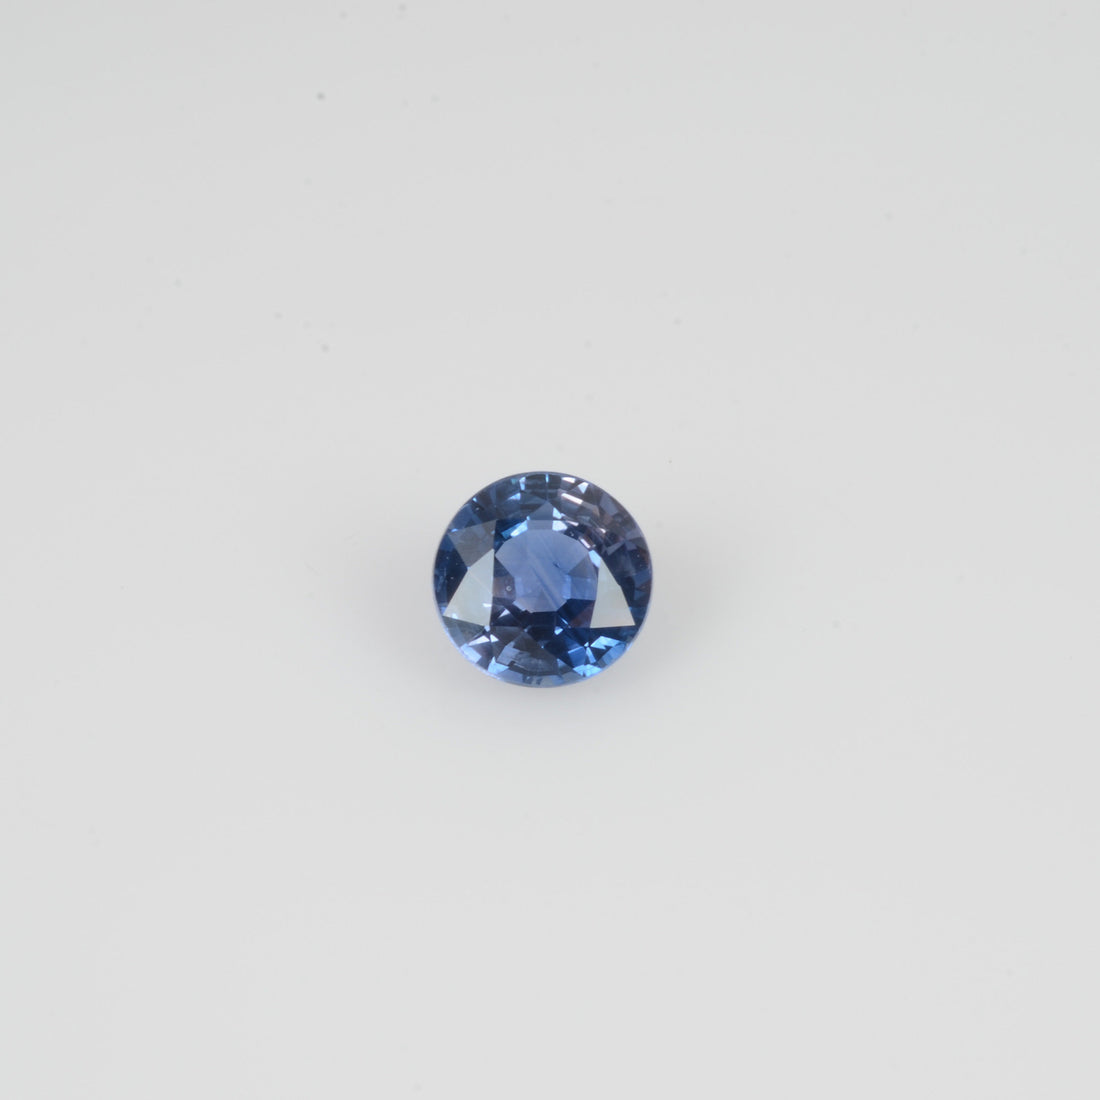 5.5 mm Natural Blue Sapphire Loose Gemstone Round Cut - Thai Gems Export Ltd.